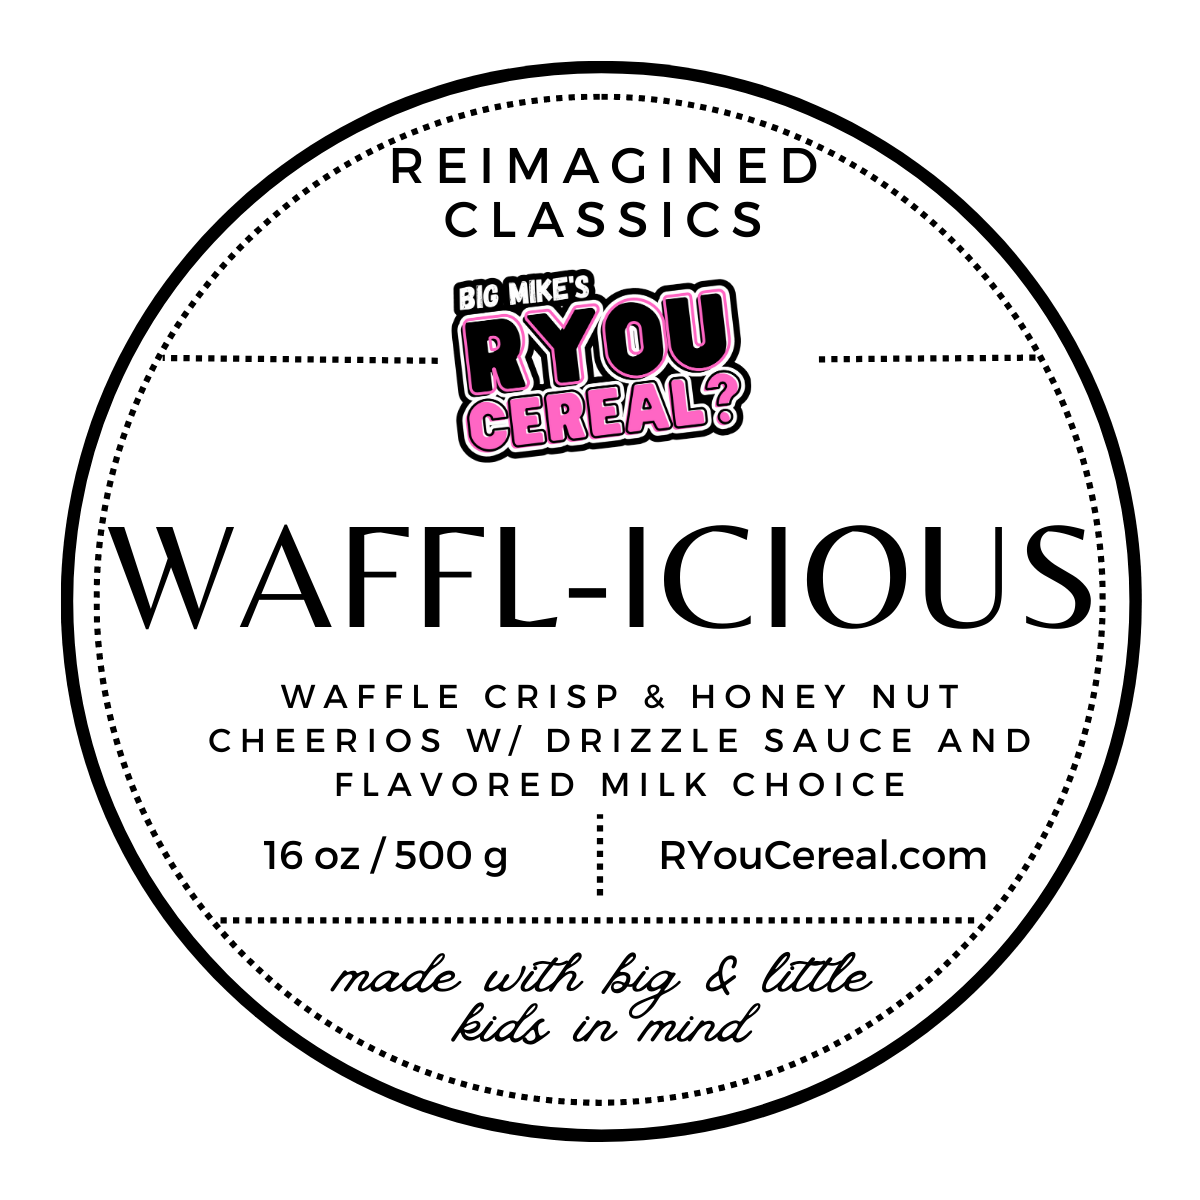 Waffl-icious!